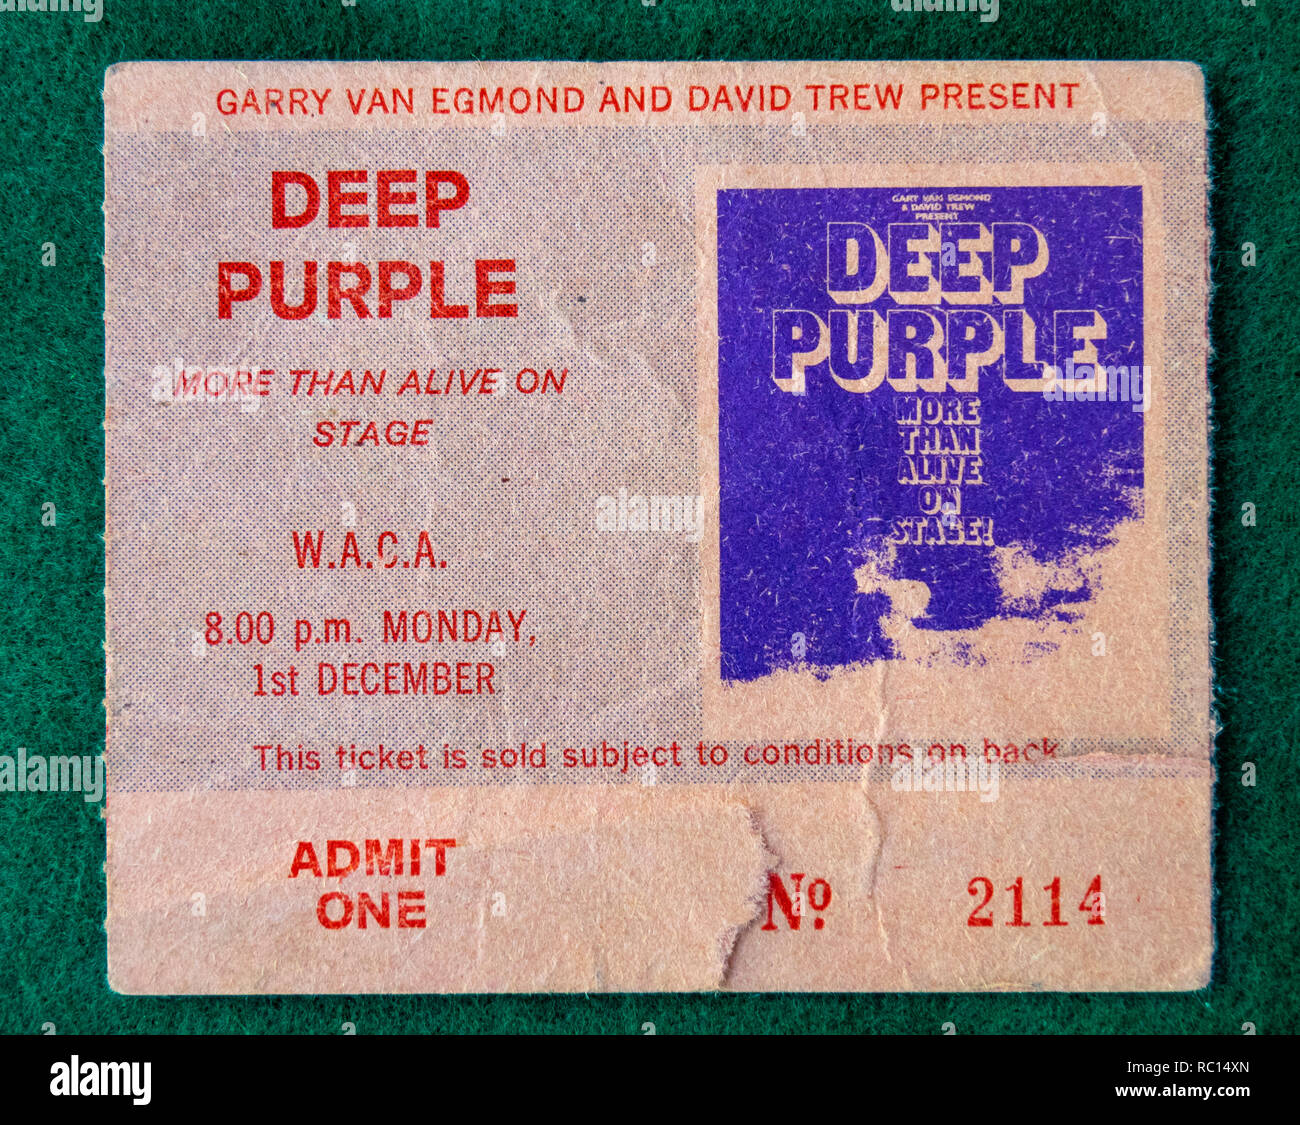 Ticket for Deep Purple concert at Perth Entertainment Centre originally